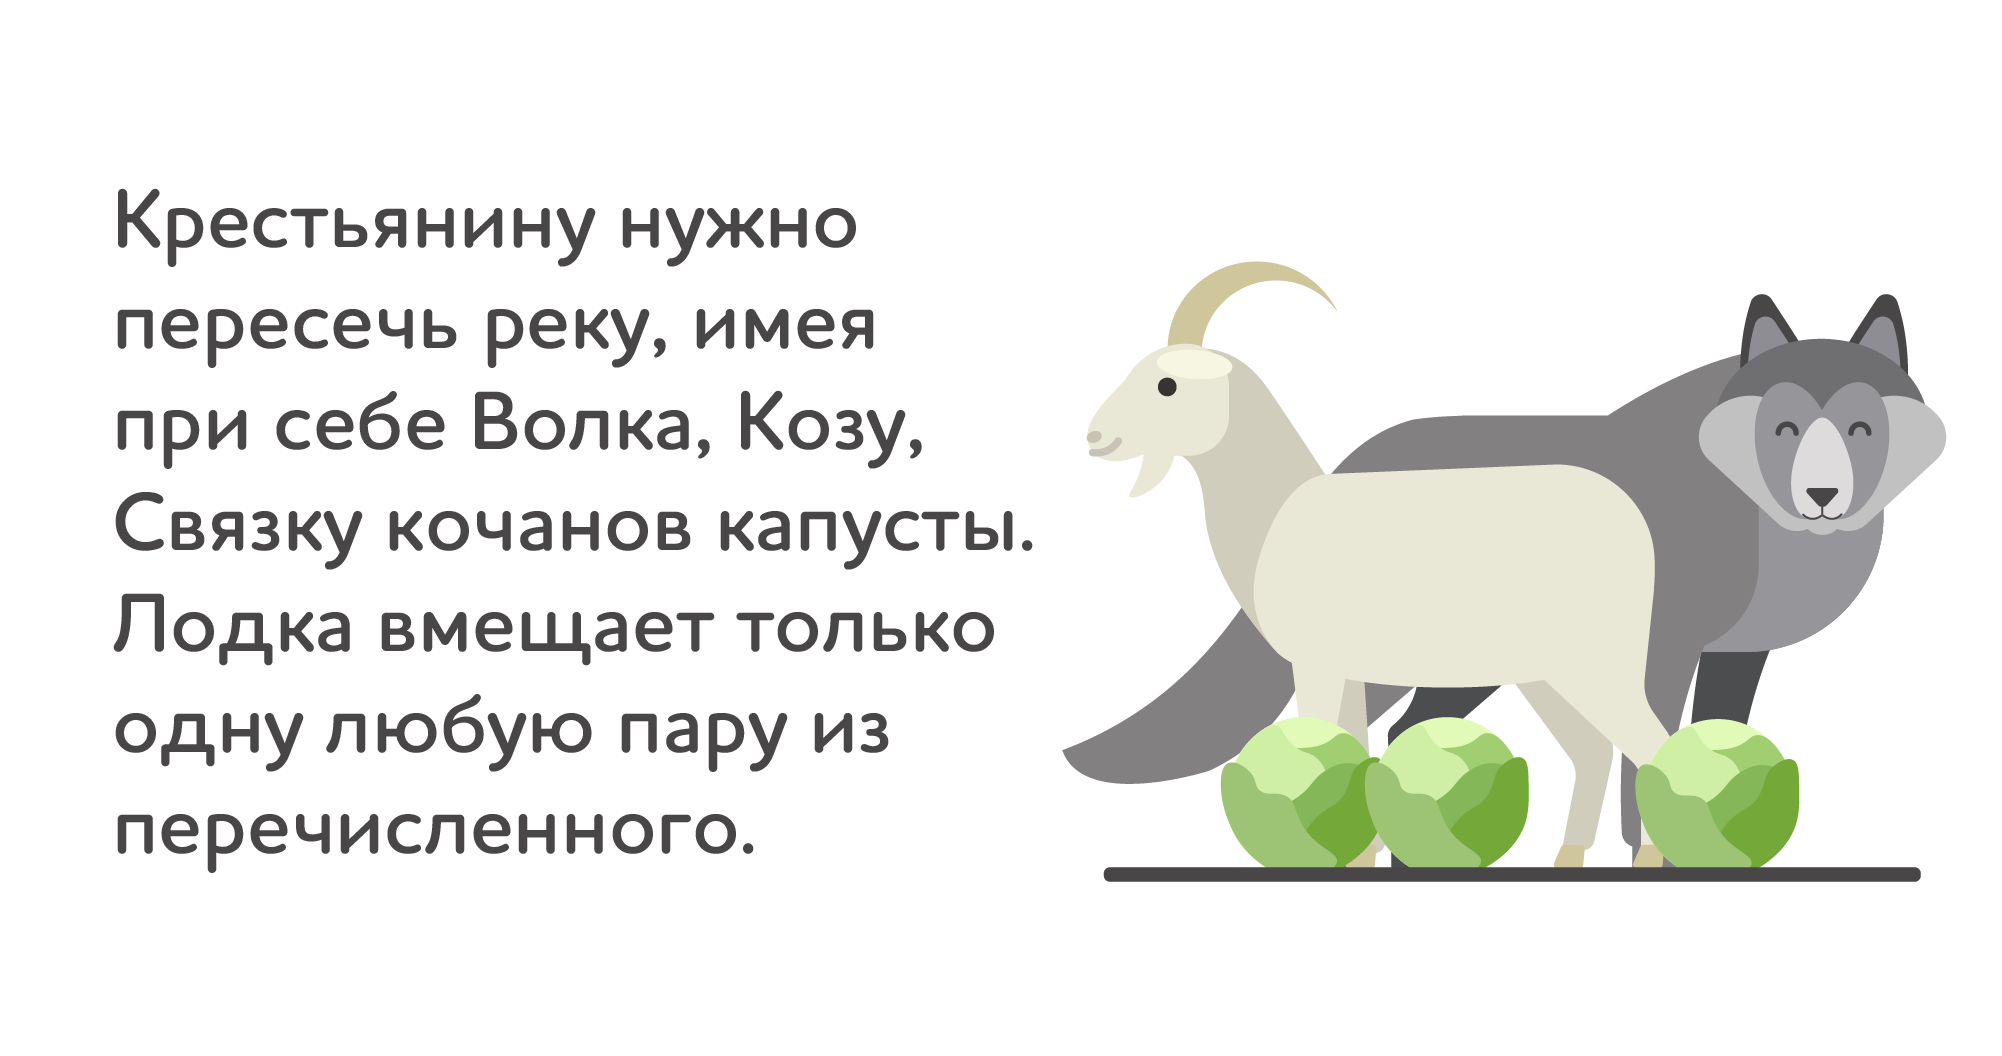 коза, волк и капуста — иллюстрация с условиями задачи о переправе